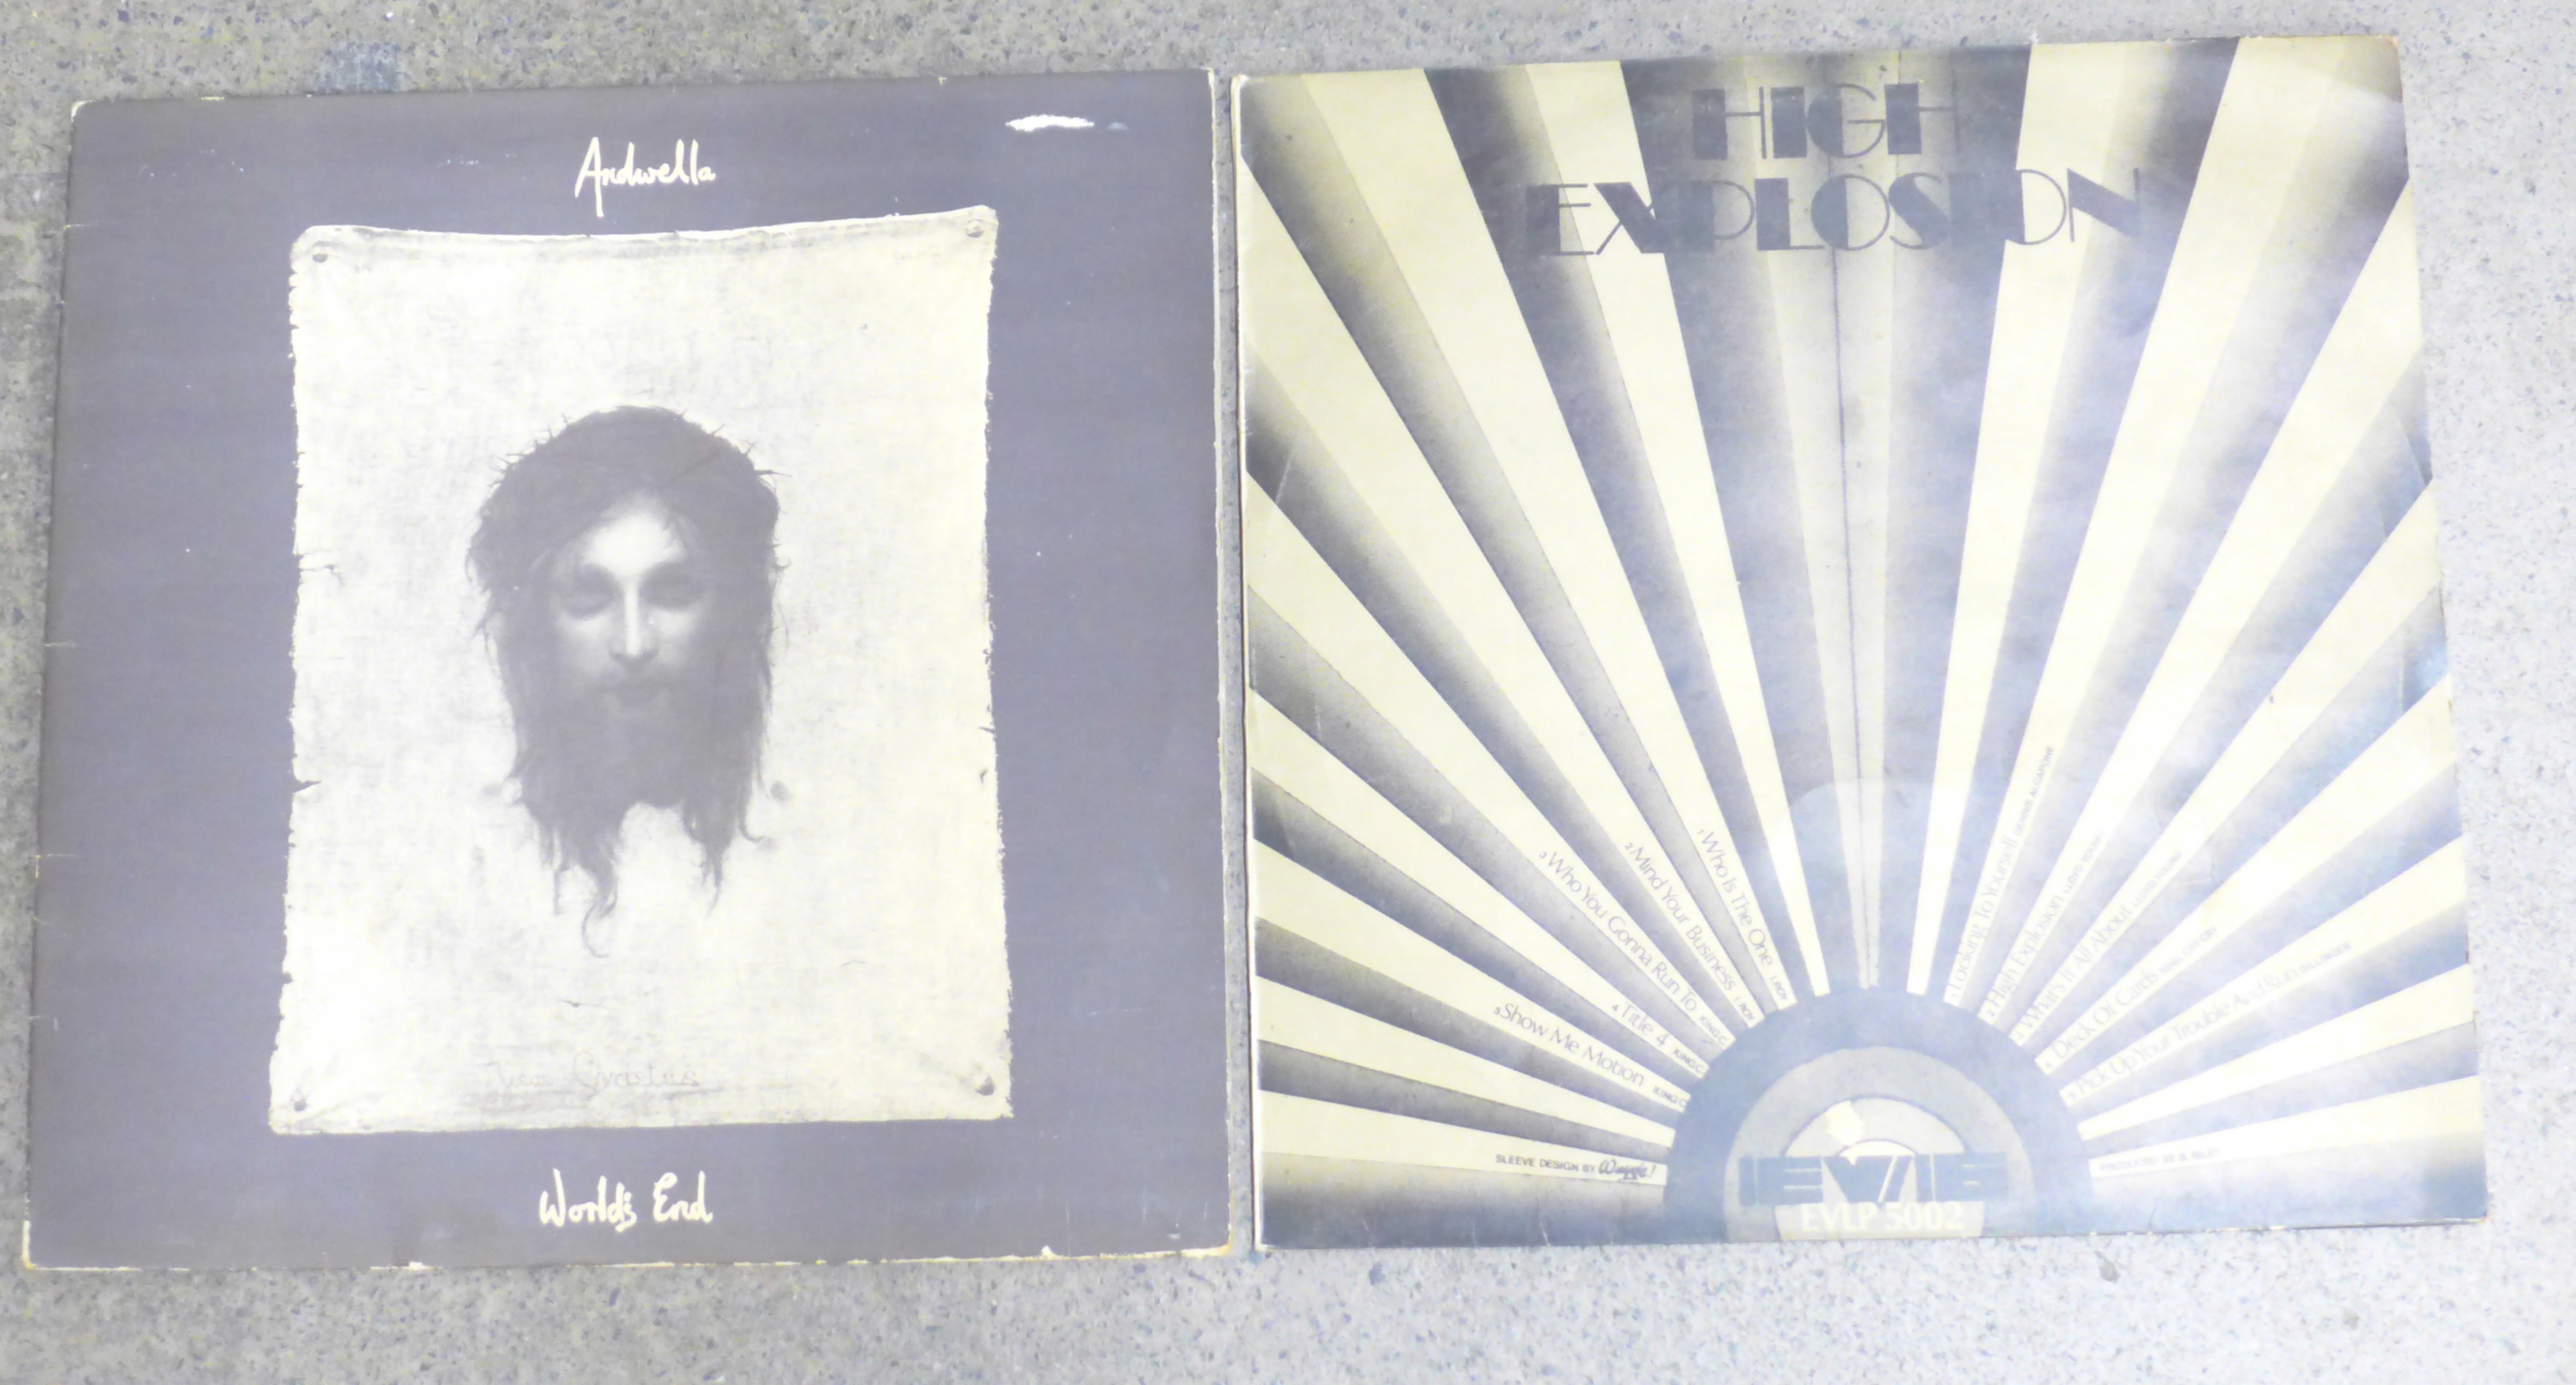 An LP record, Andwella - World's End, gatefold sleeve (first pressing, matrix R8BA A) and High